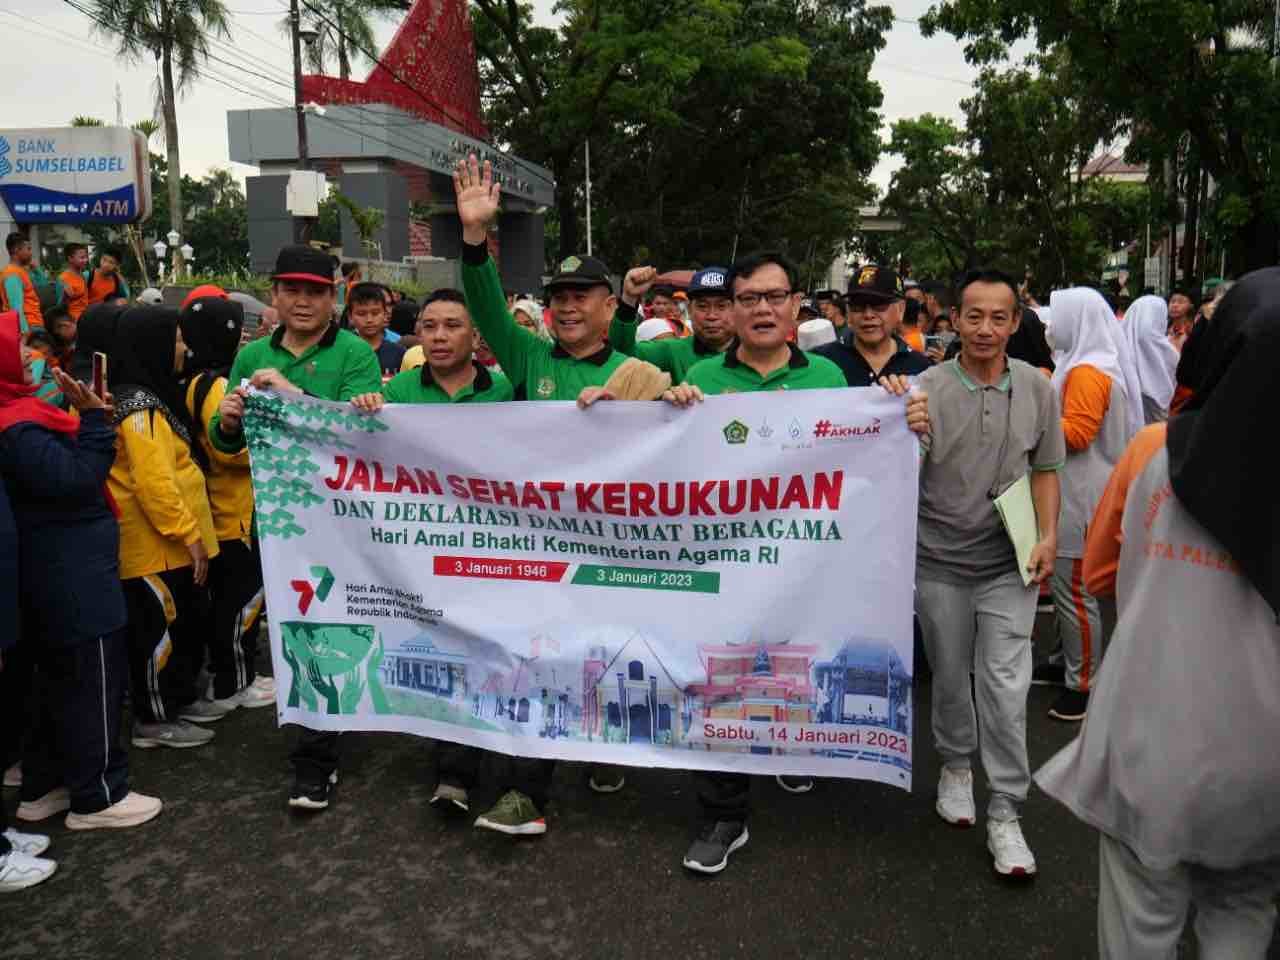 Kantor Wilayah Kementerian Agama Provinsi Sumatera Selatan menggelar jalan sehat kerukunan